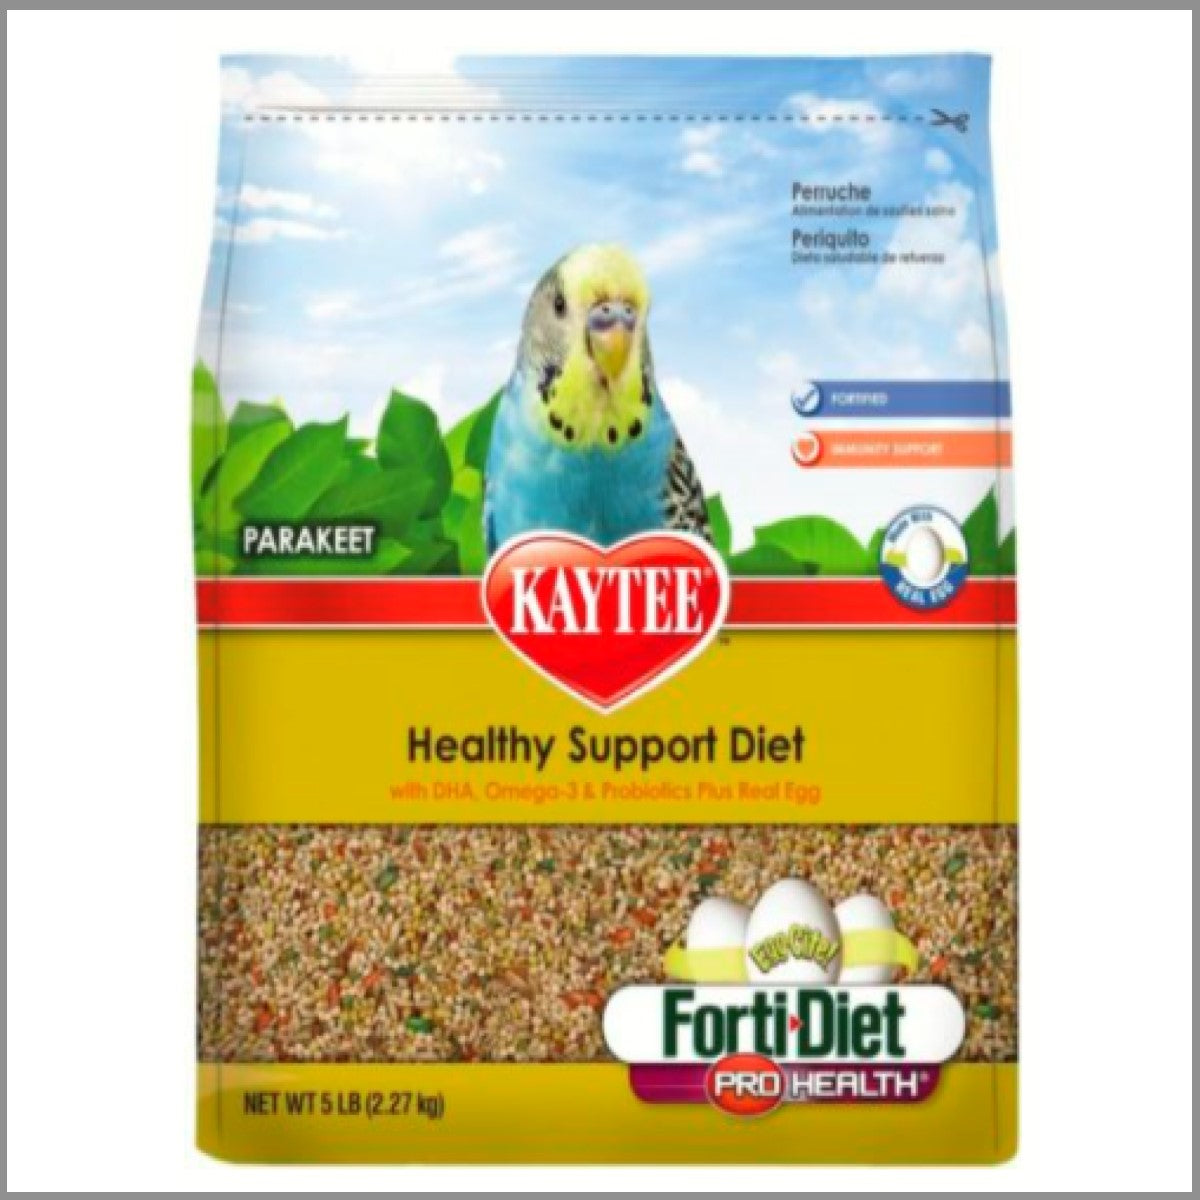 Kaytee Forti-Diet Pro Health Parakeet Food(5lb)